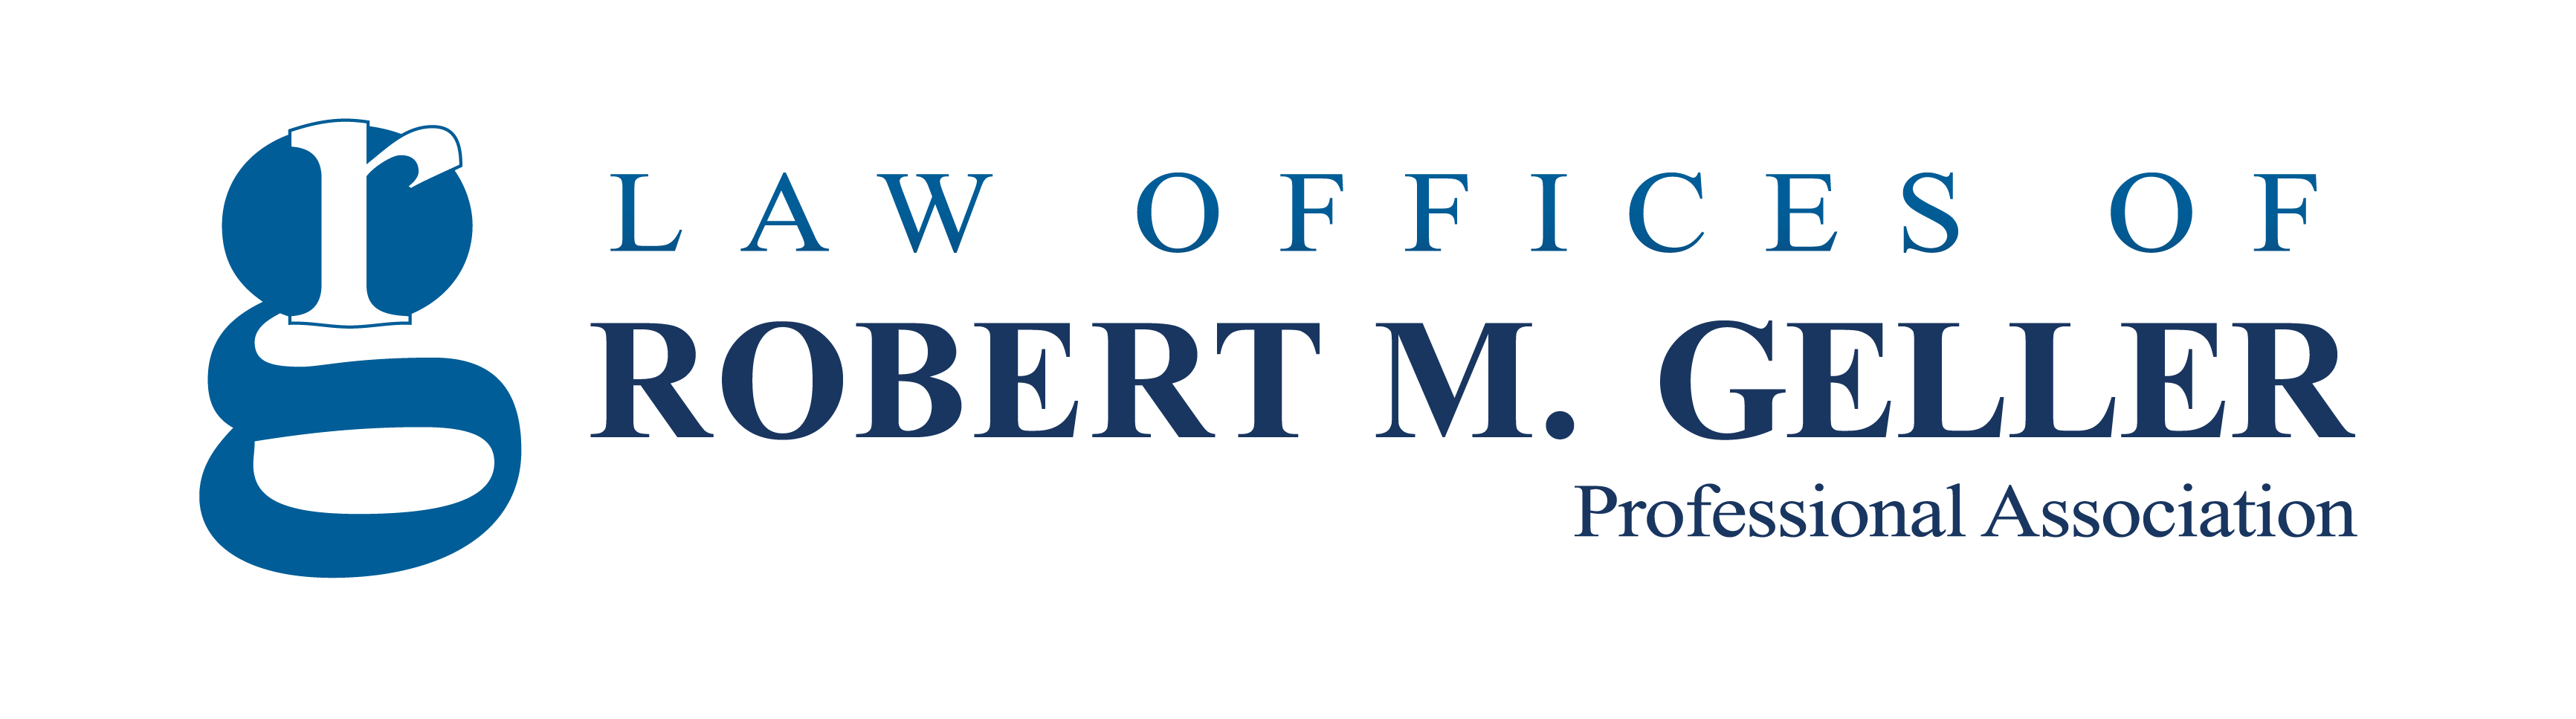 Law Offices of Robert M. Geller Logo